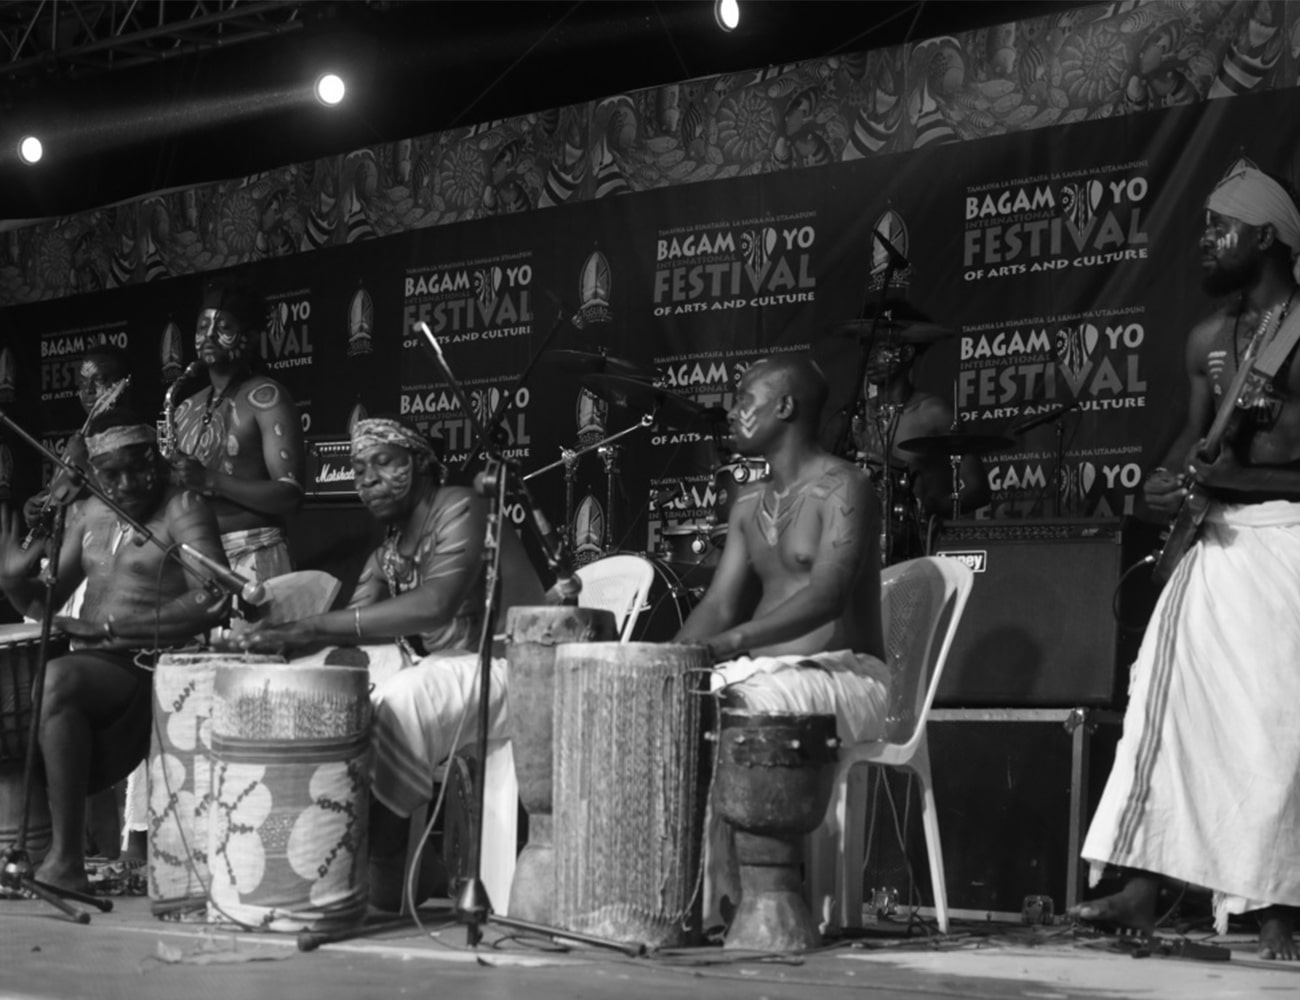 Dance and Culture at the Bagamoyo Festival in Tanzania